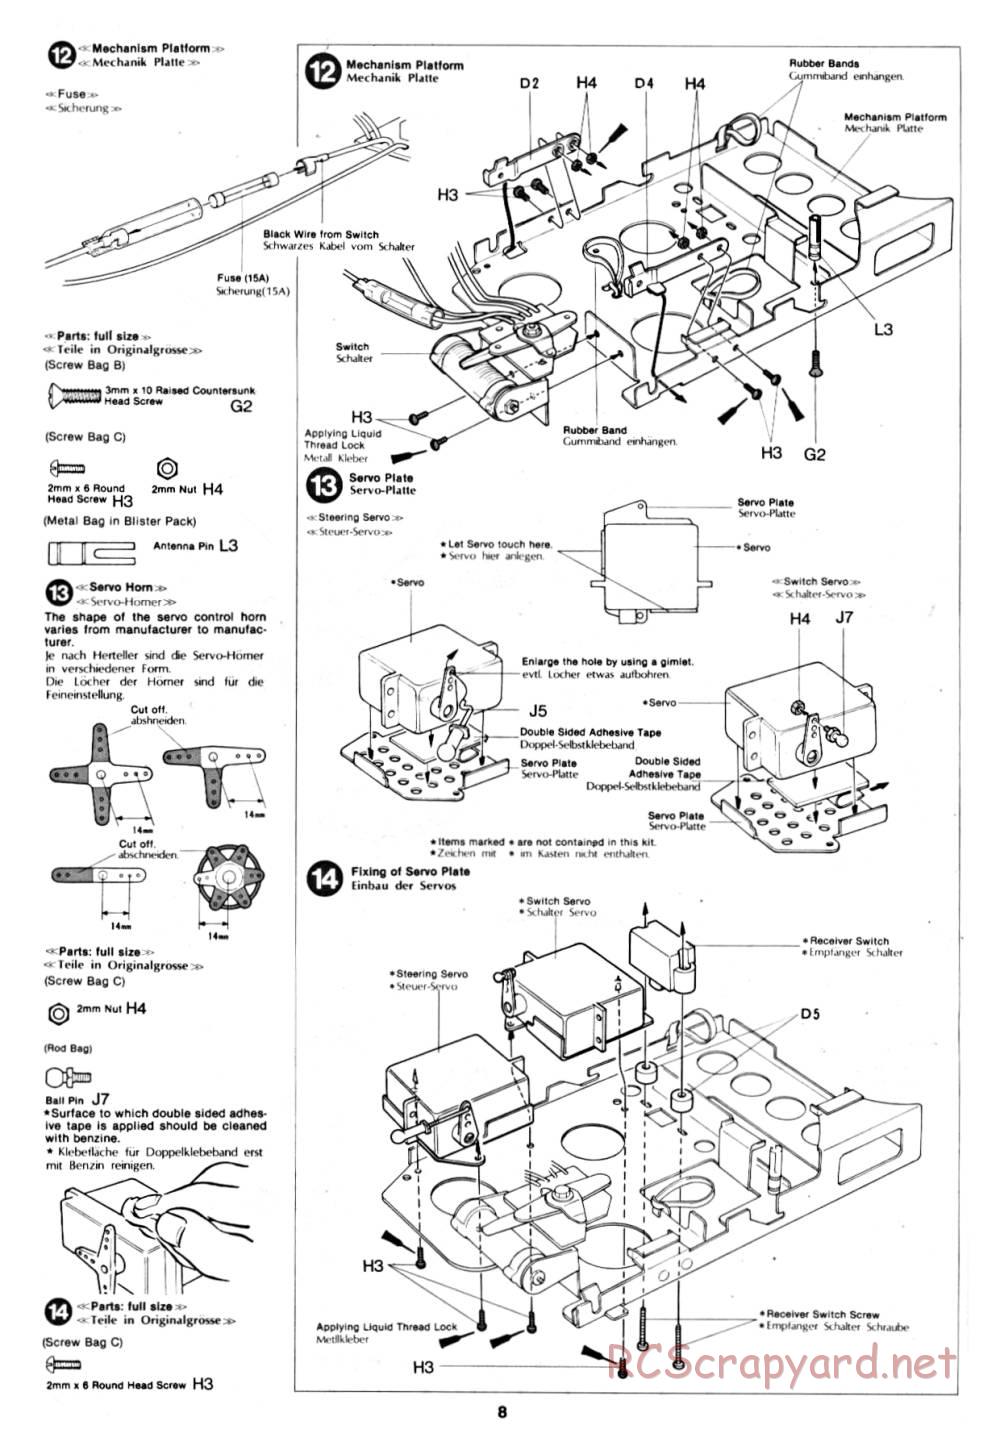 Tamiya - Williams FW-07 (CS) - 58019 - Manual - Page 8